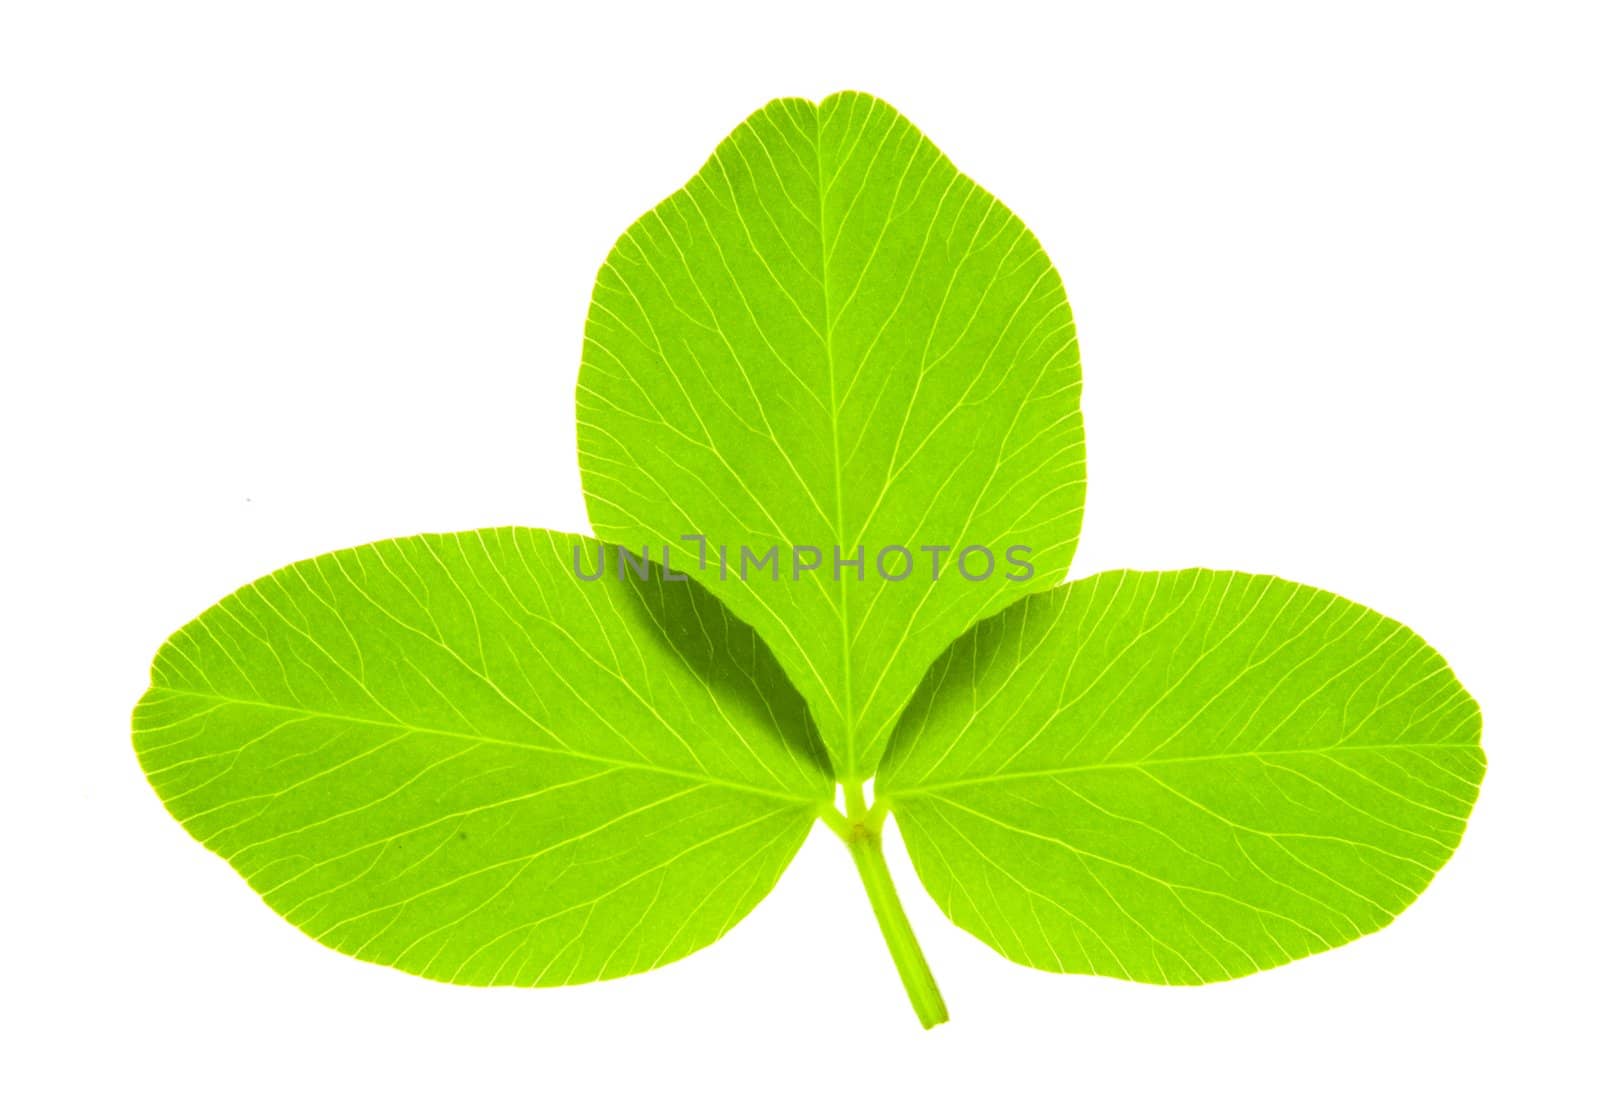 Detail of a trefoil leaf blade of clover - macro